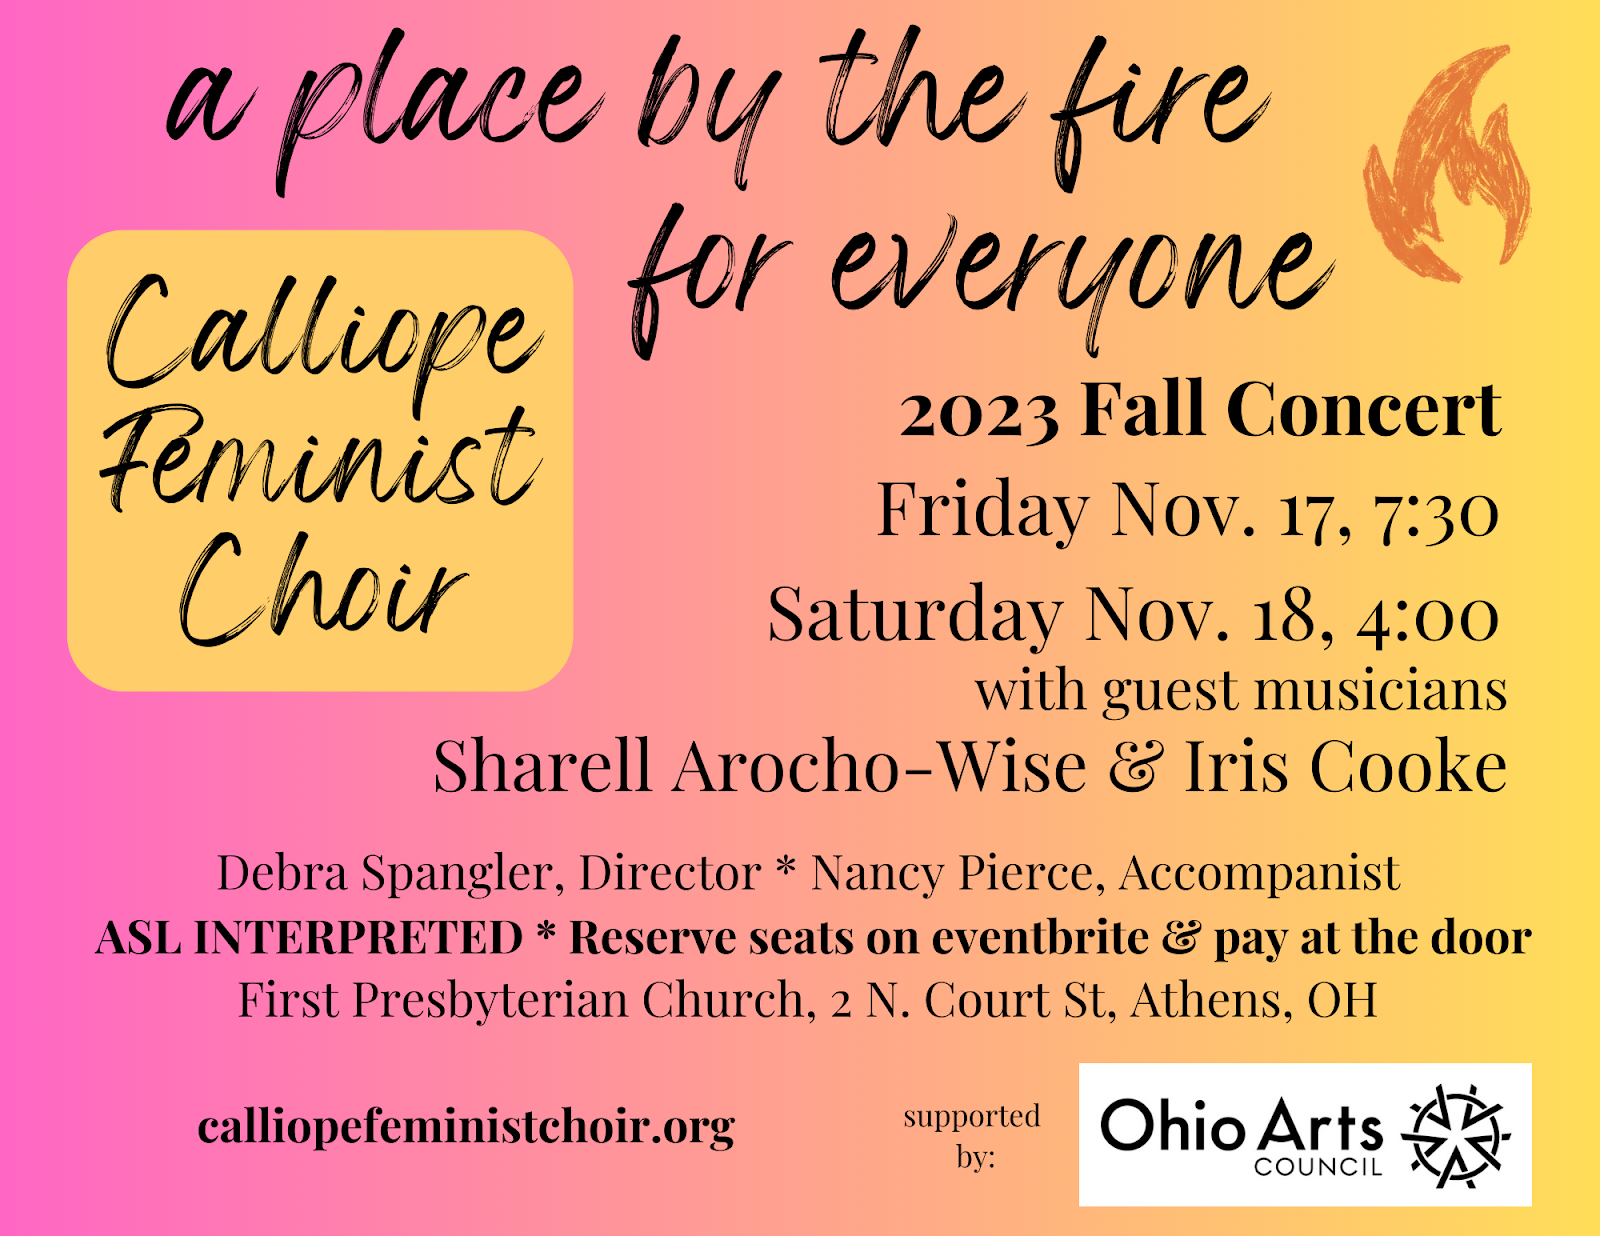 A flyer for the November Calliope Feminist Choir performances.